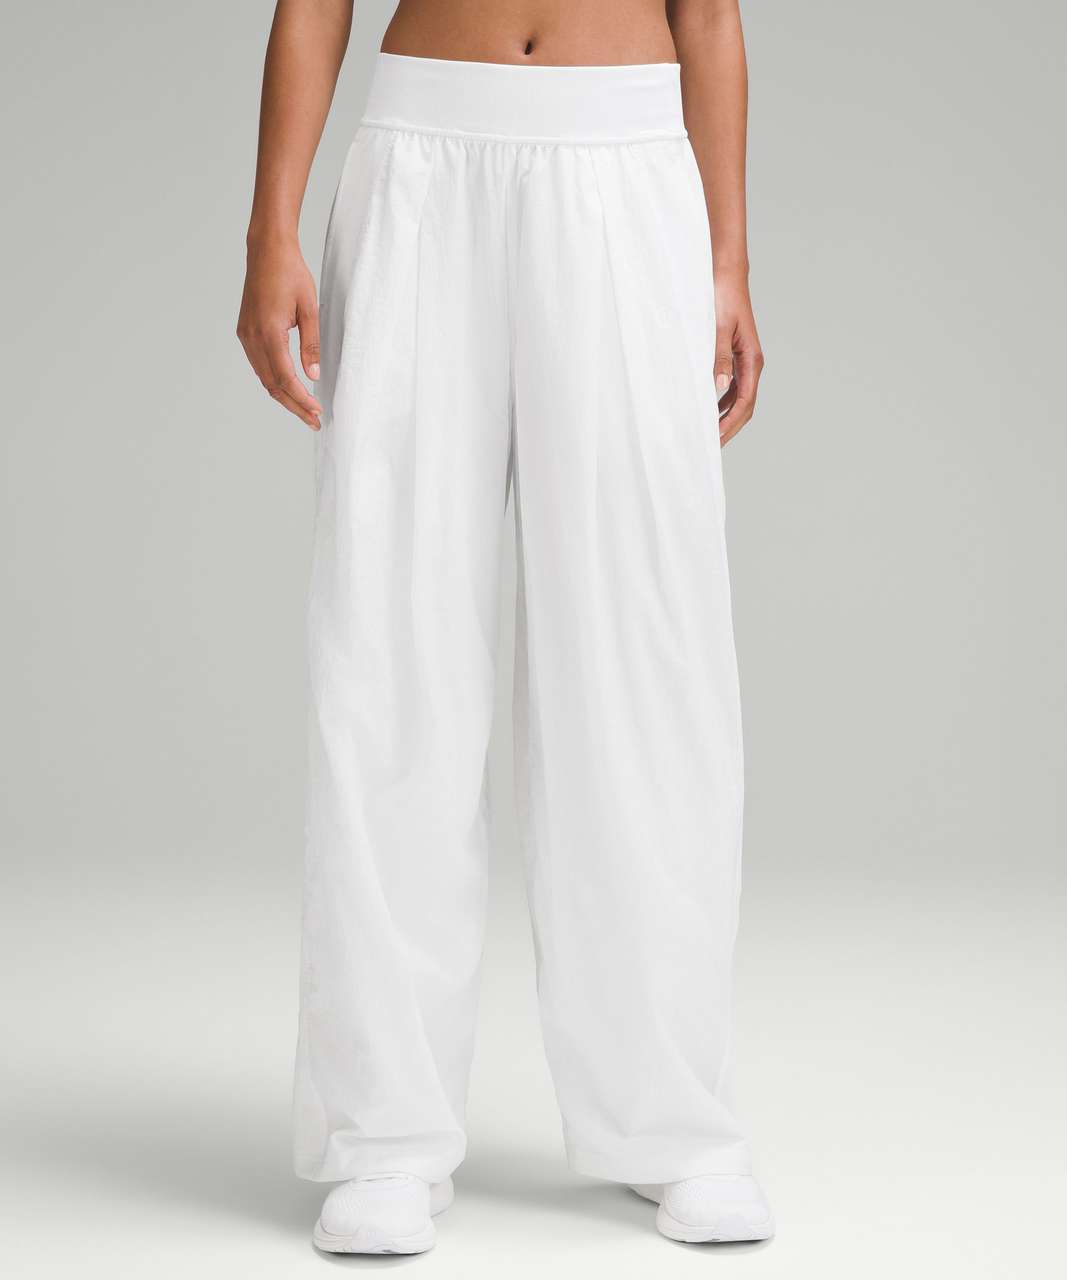 Lululemon Lightweight Tennis Mid-Rise Track Pants *Full Length - White -  lulu fanatics